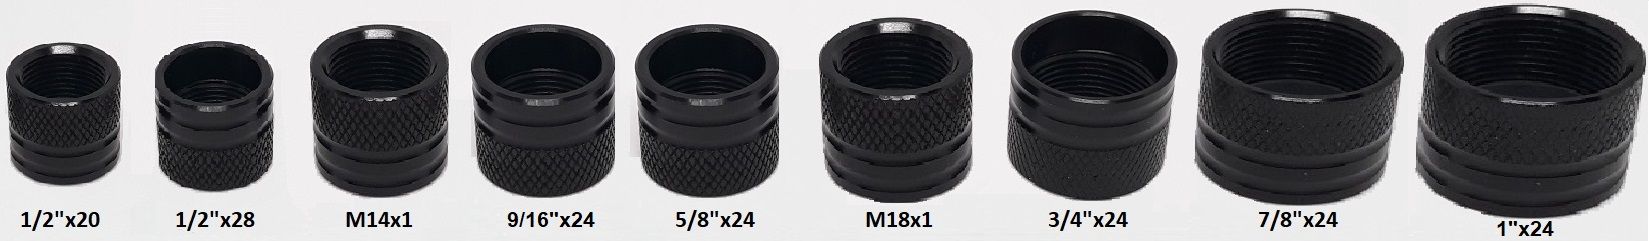 Barrel Muzzle Brake Thread Cap Protector Cover Screw On Black Aluminium